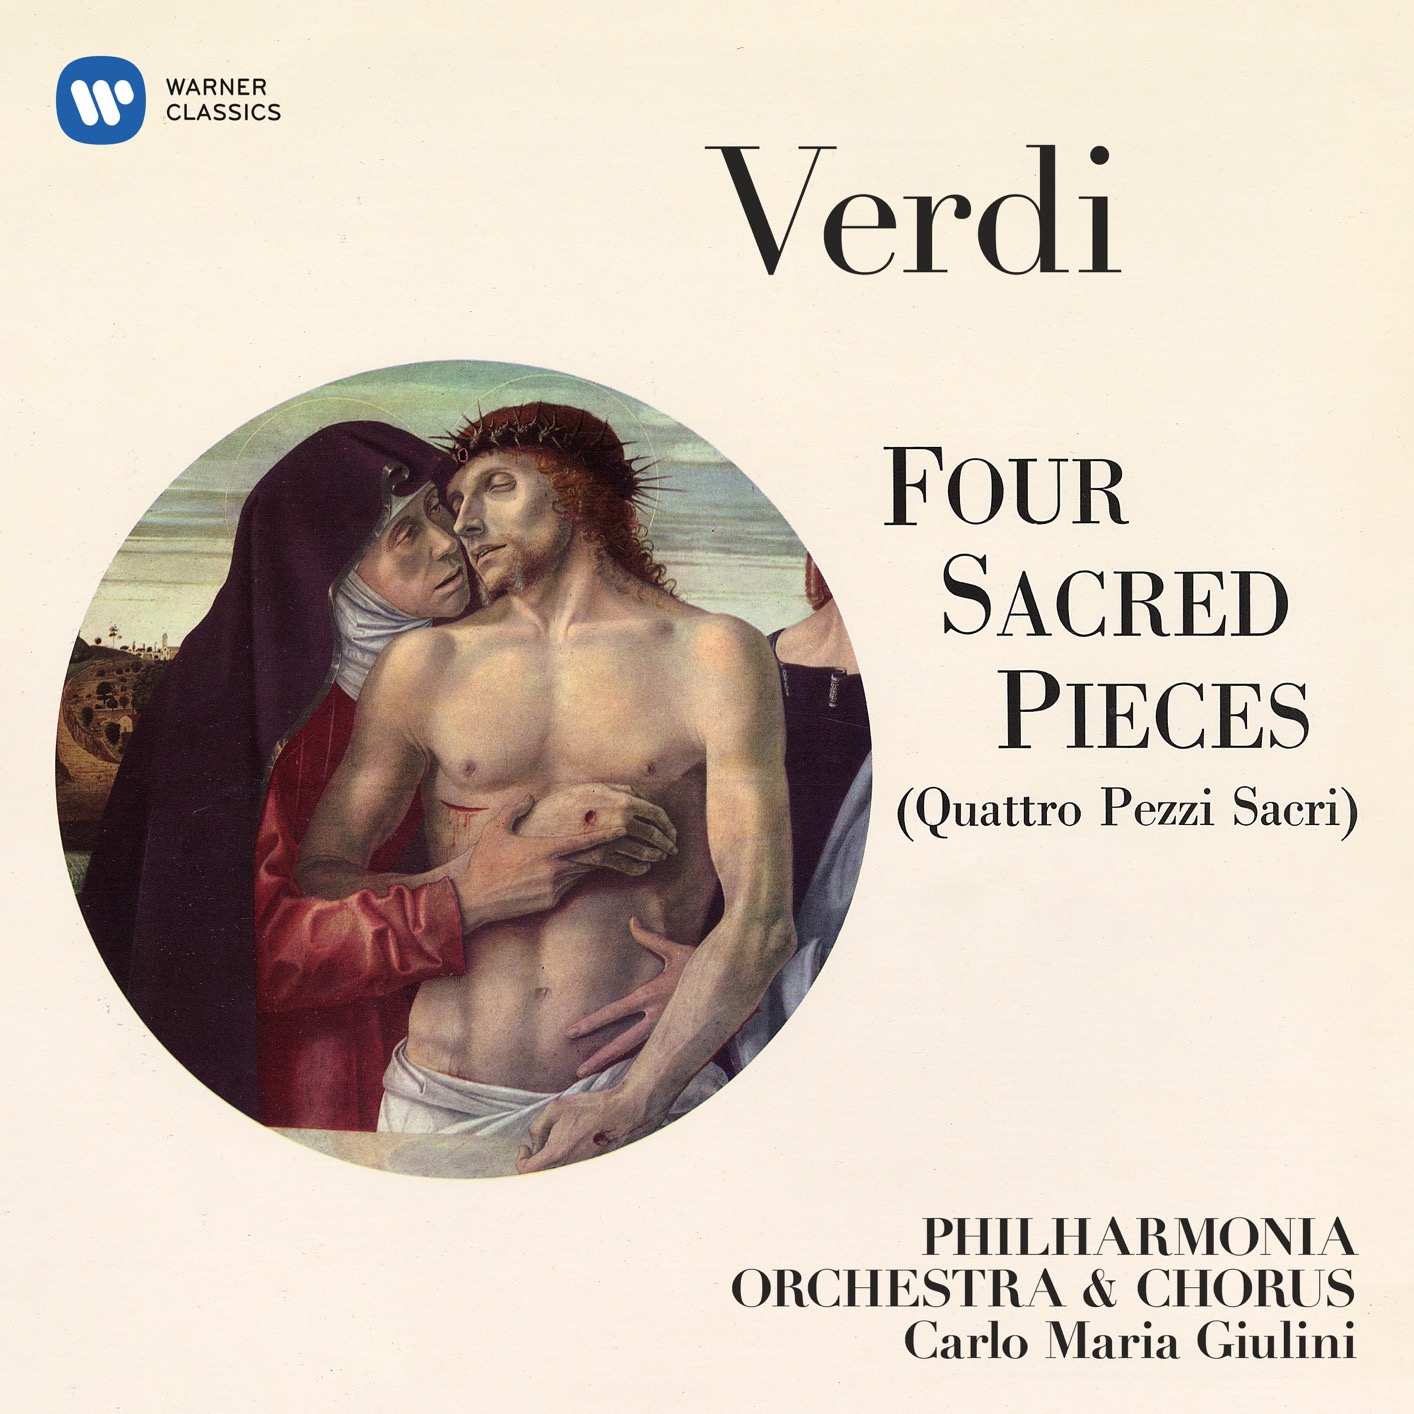 Philharmonia Orchestra, Philharmonia Chorus & Carlo Maria Giulini – Verdi: Four Sacred Pieces (Quattro Pezzi Sacri) (Remastered) (1963/2020) [FLAC 24bit/192kHz]